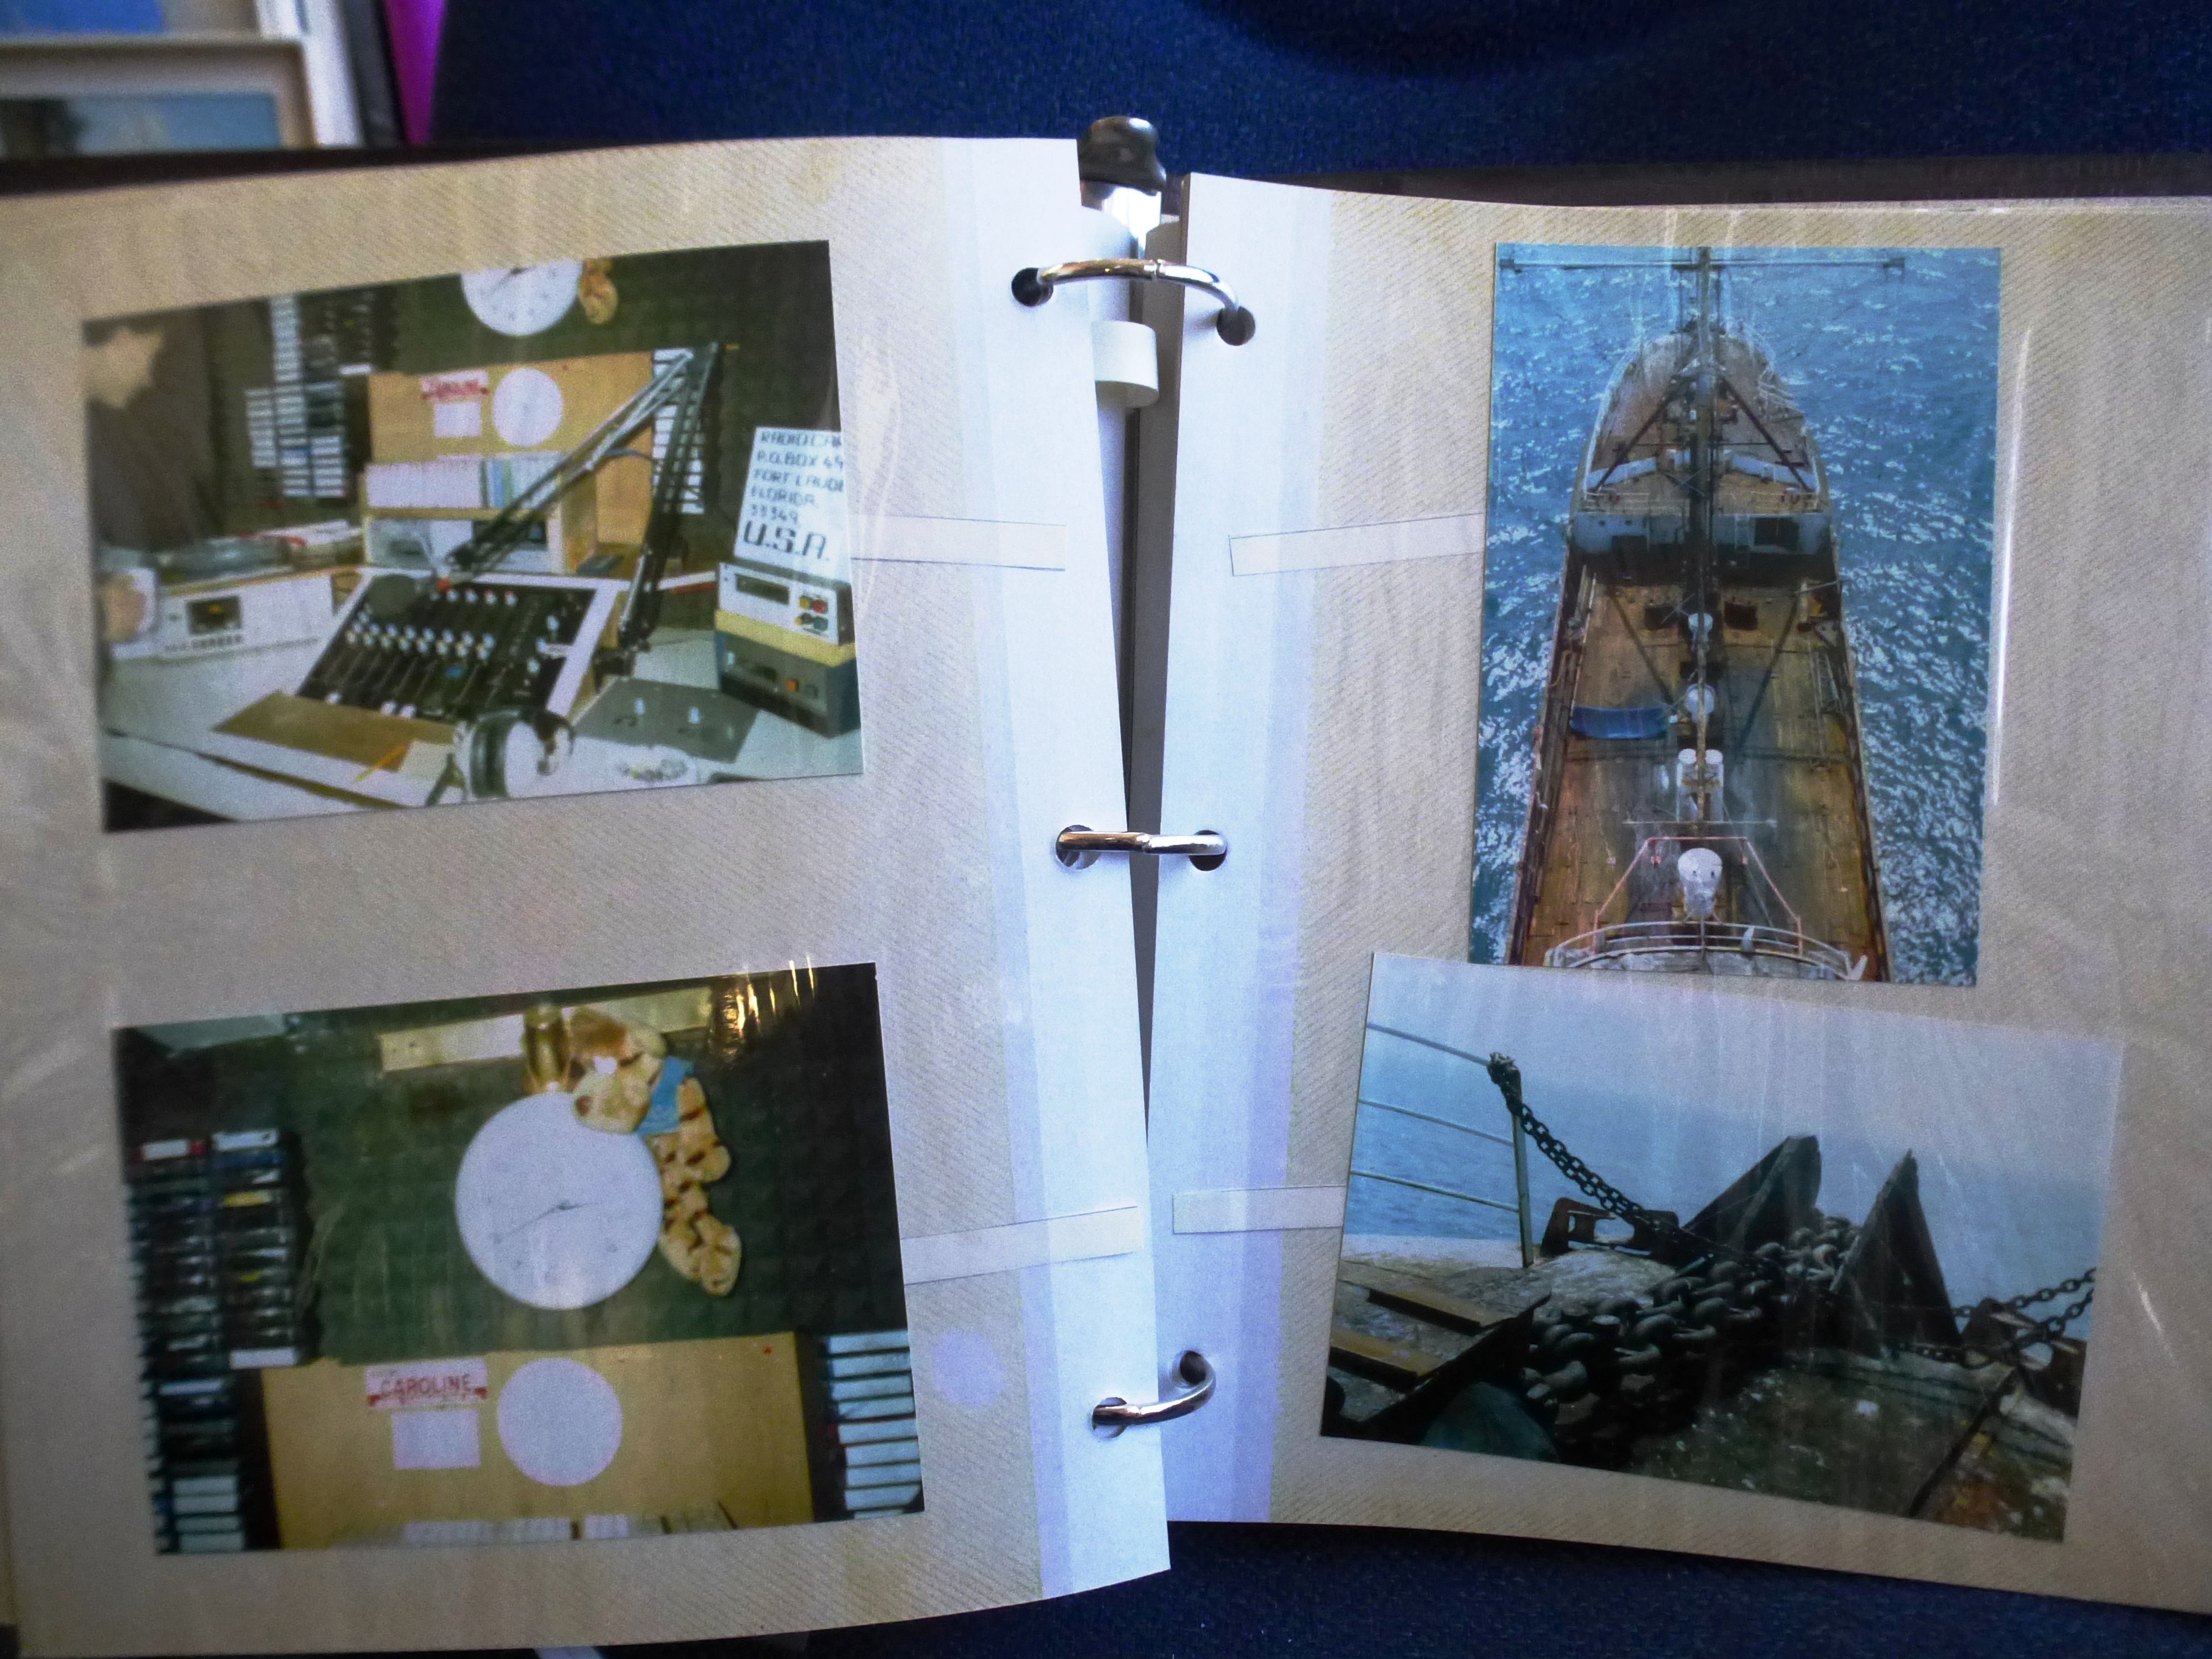 RADIO CAROLINE PHOTOGRAPH ALBUM WITH PHOTOGRAPHS OF THE SHIP, INTERIOR, DJS, EQUIPMENT, MAINTENANCE, - Image 25 of 28